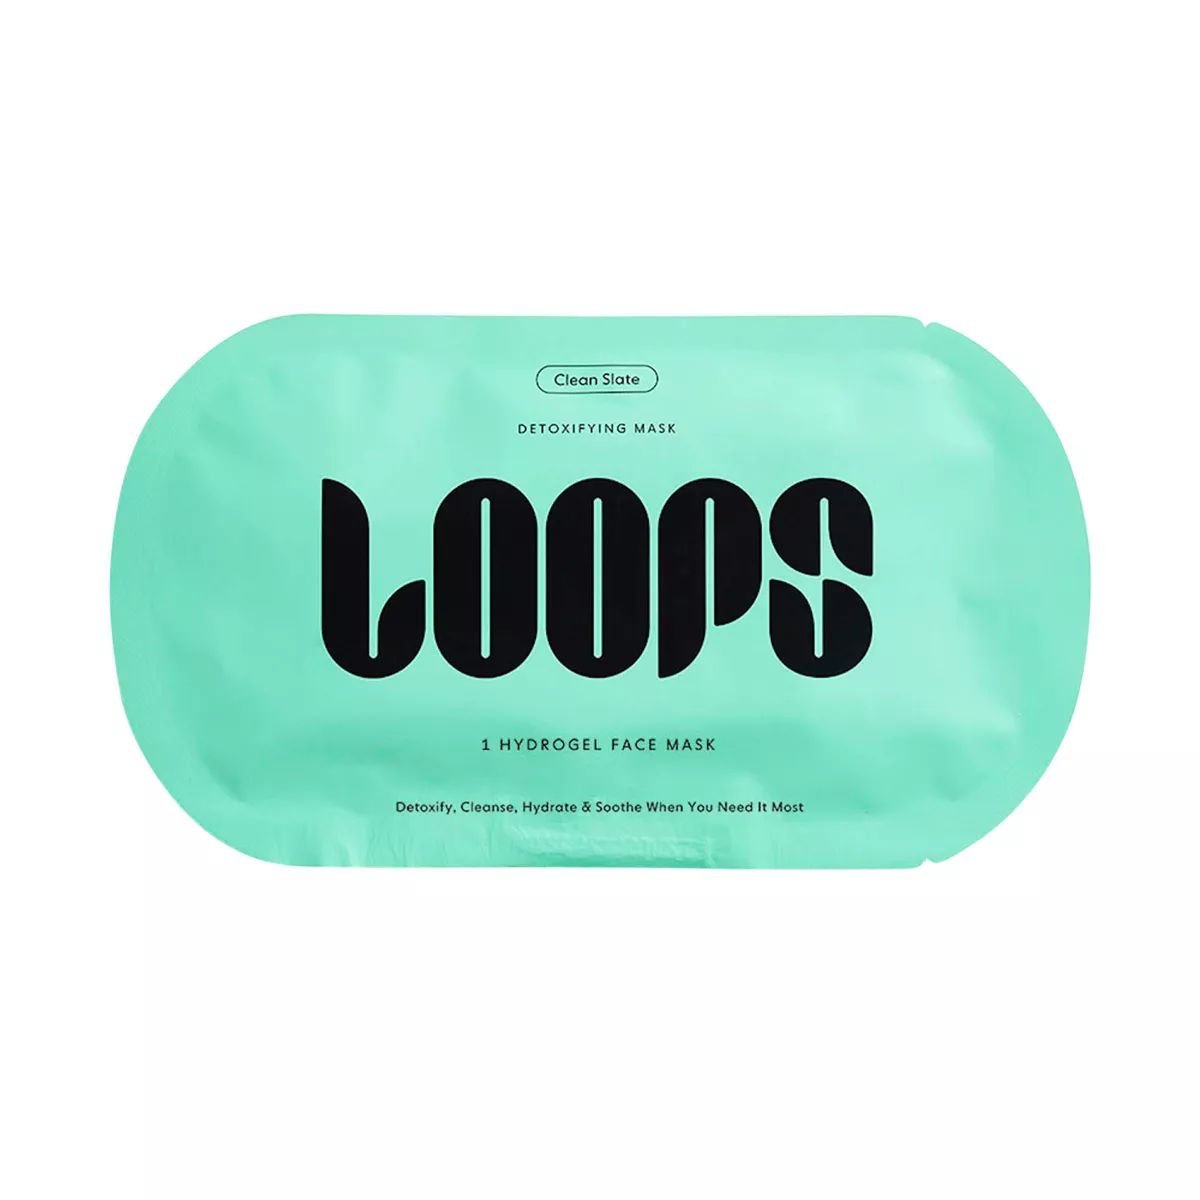 LOOPS Clean Slate Detoxifying Mask - 1.058oz | Target